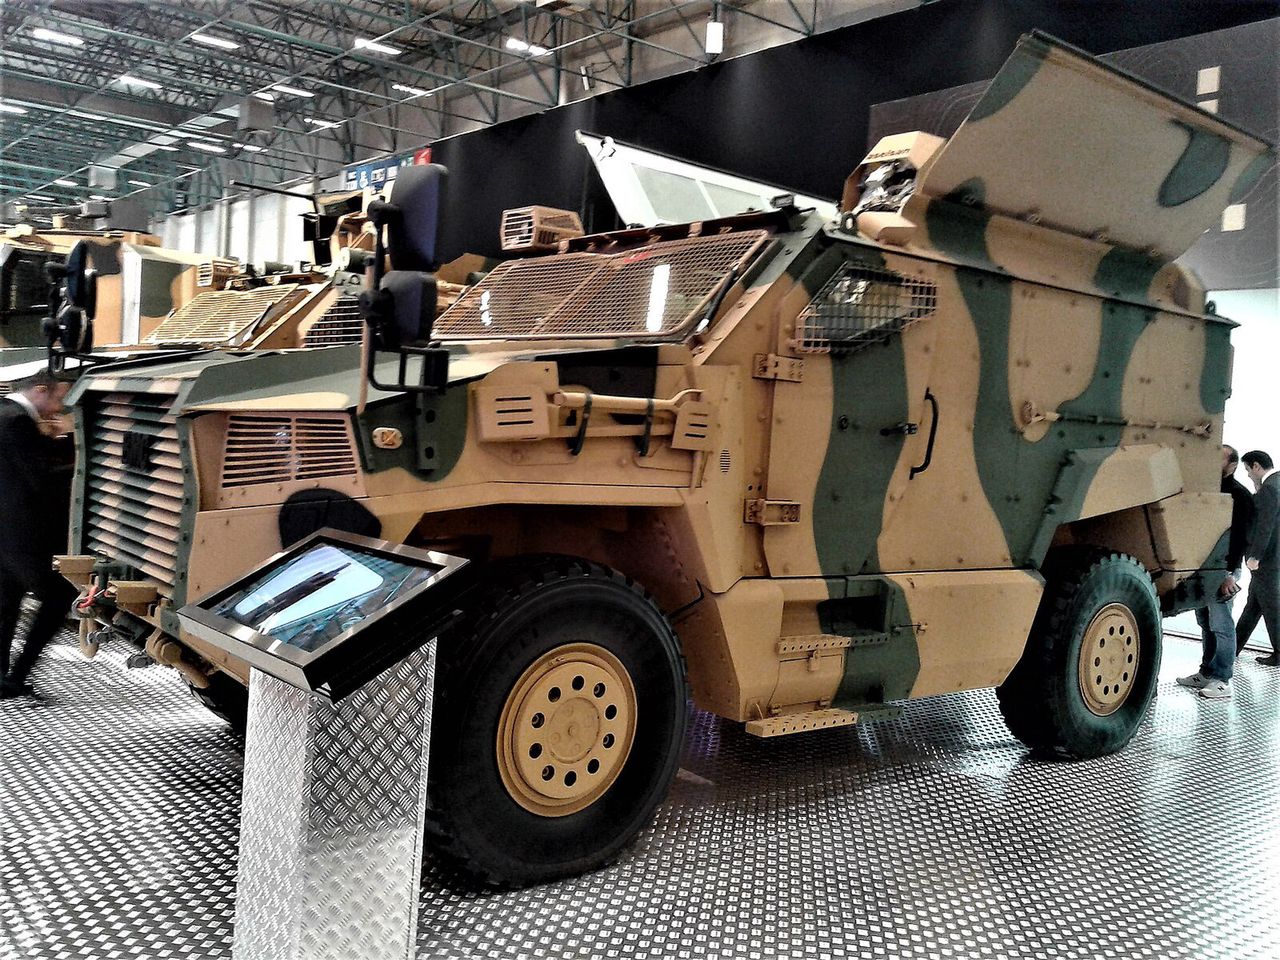 Georgia upgrades defense with Turkish Vuran armored vehicles